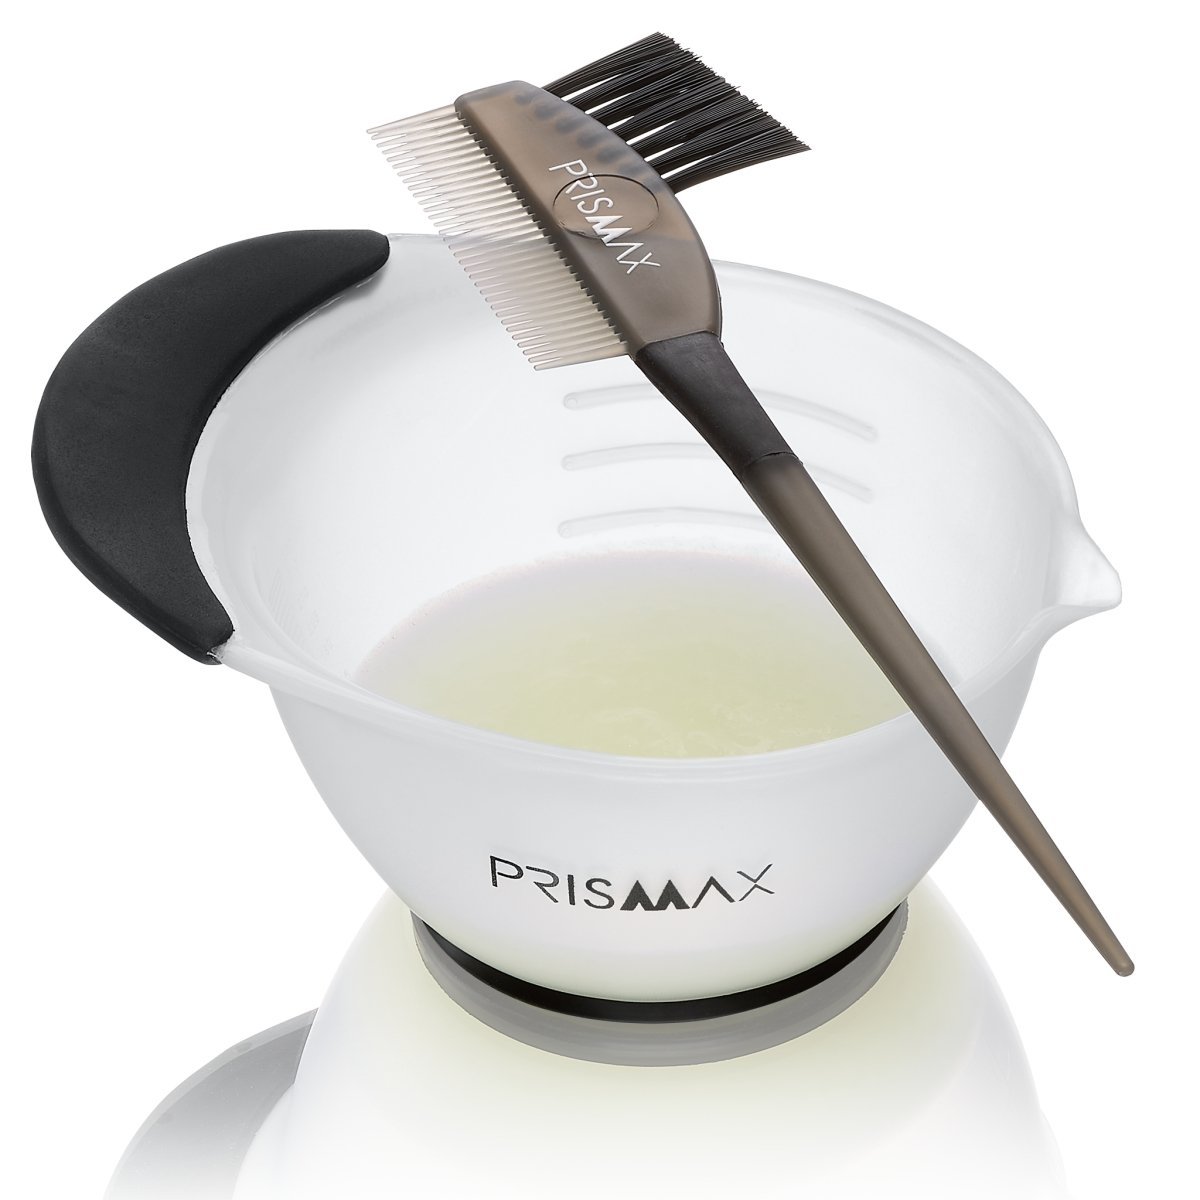 Prismax Mixing Bowl and Applicator Brush - Prismax Cosmetics